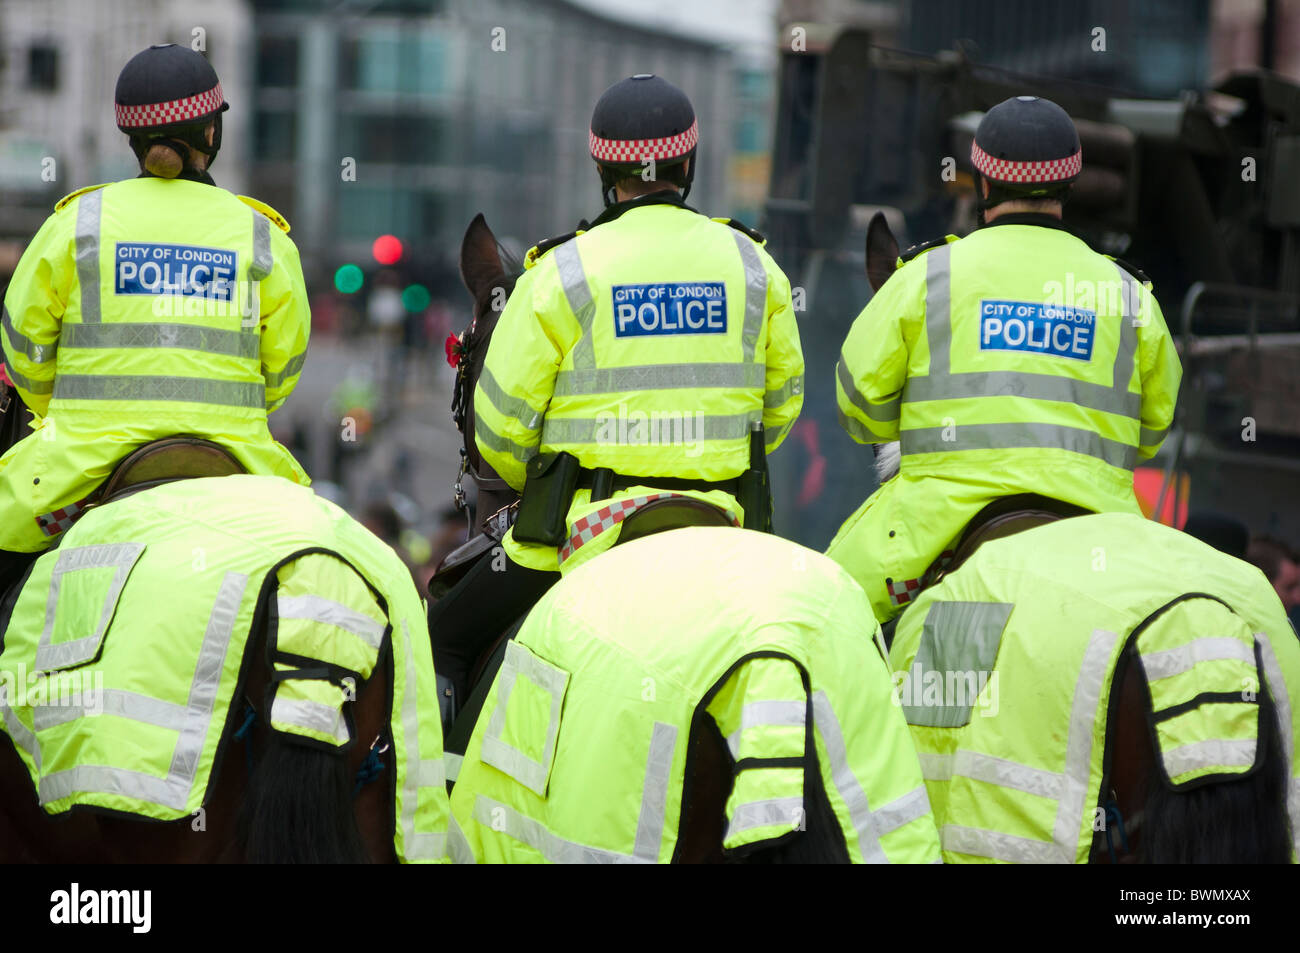 Mounted police in London. UK Stock Photo